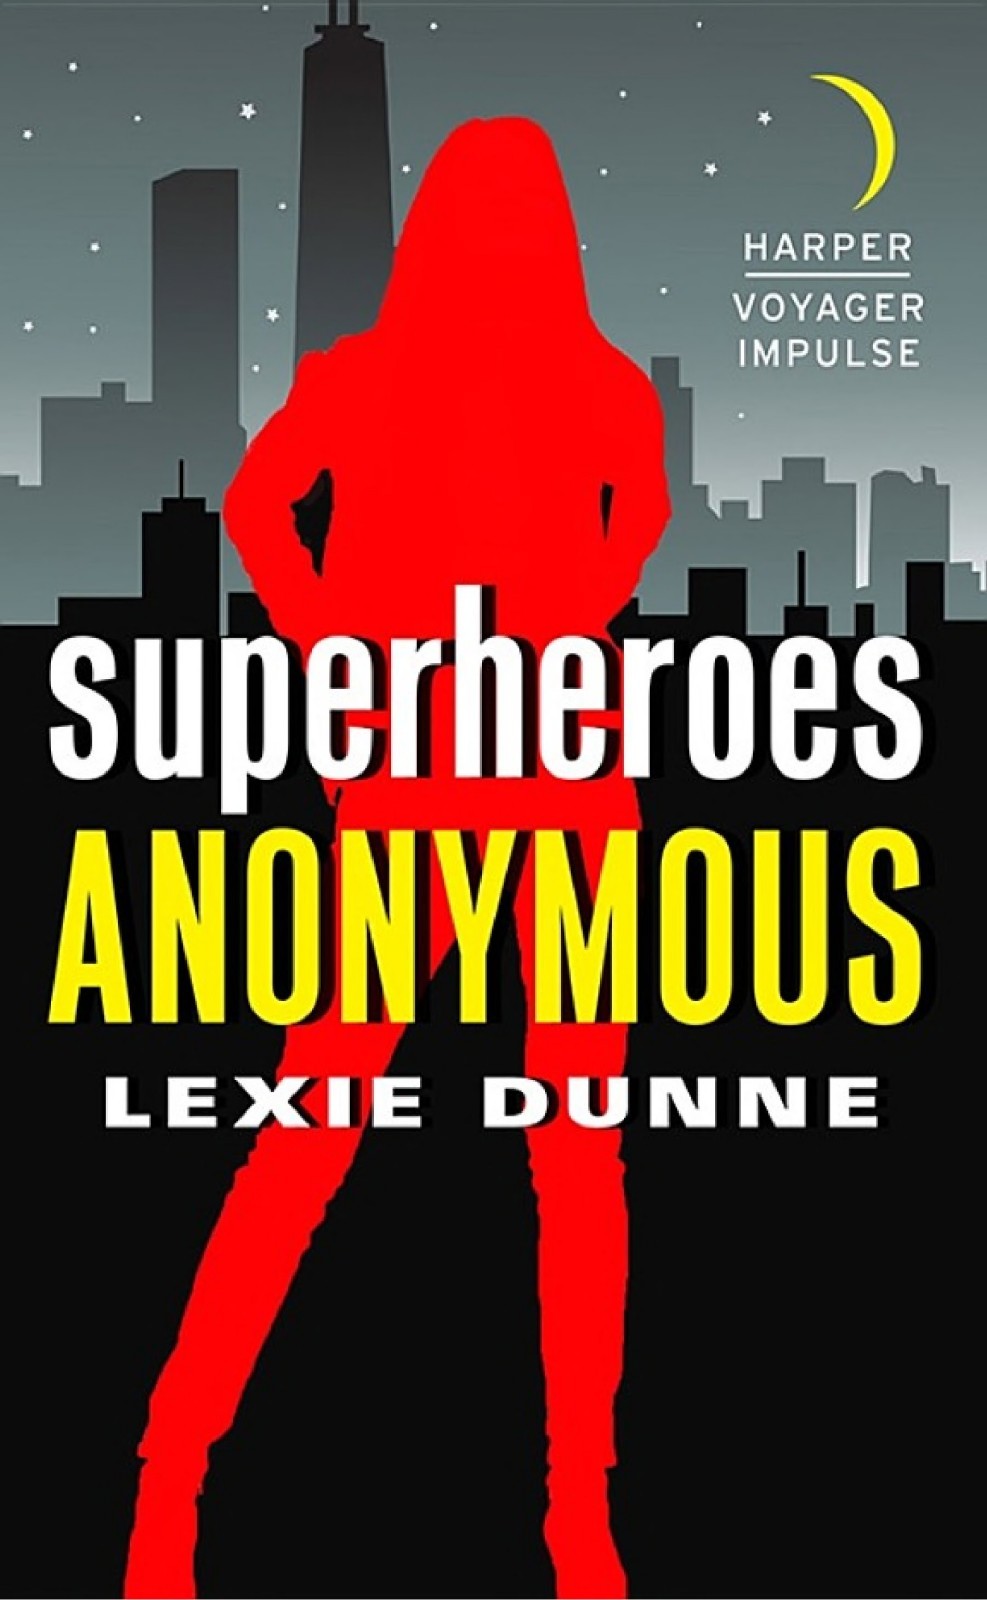 Superheroes Anonymous